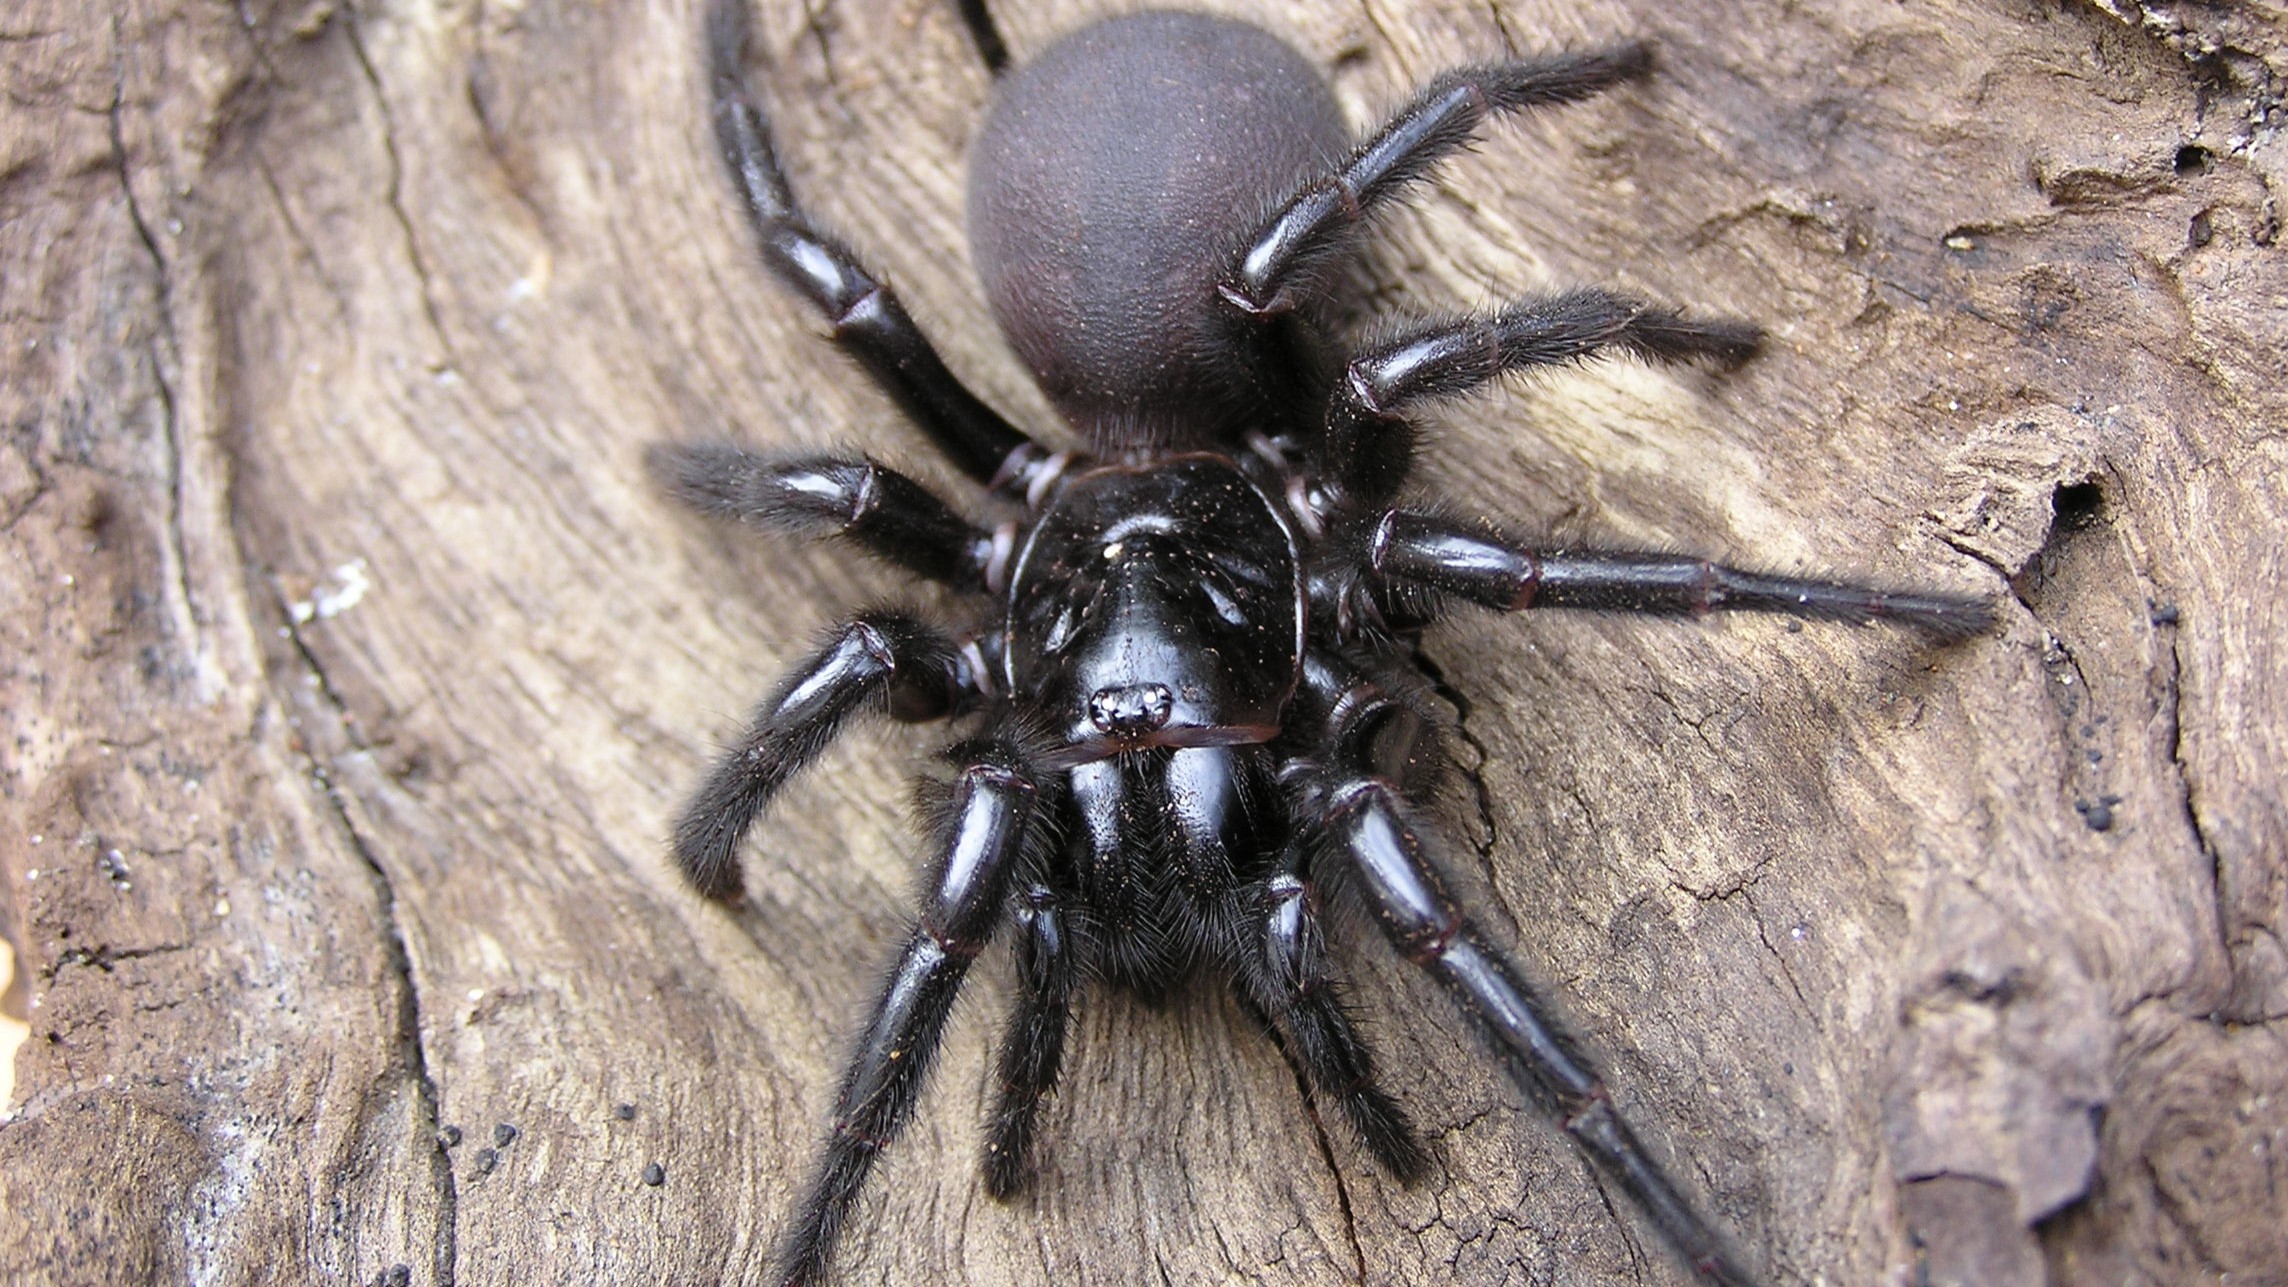 a sydney funnel web spider standing on tree bark